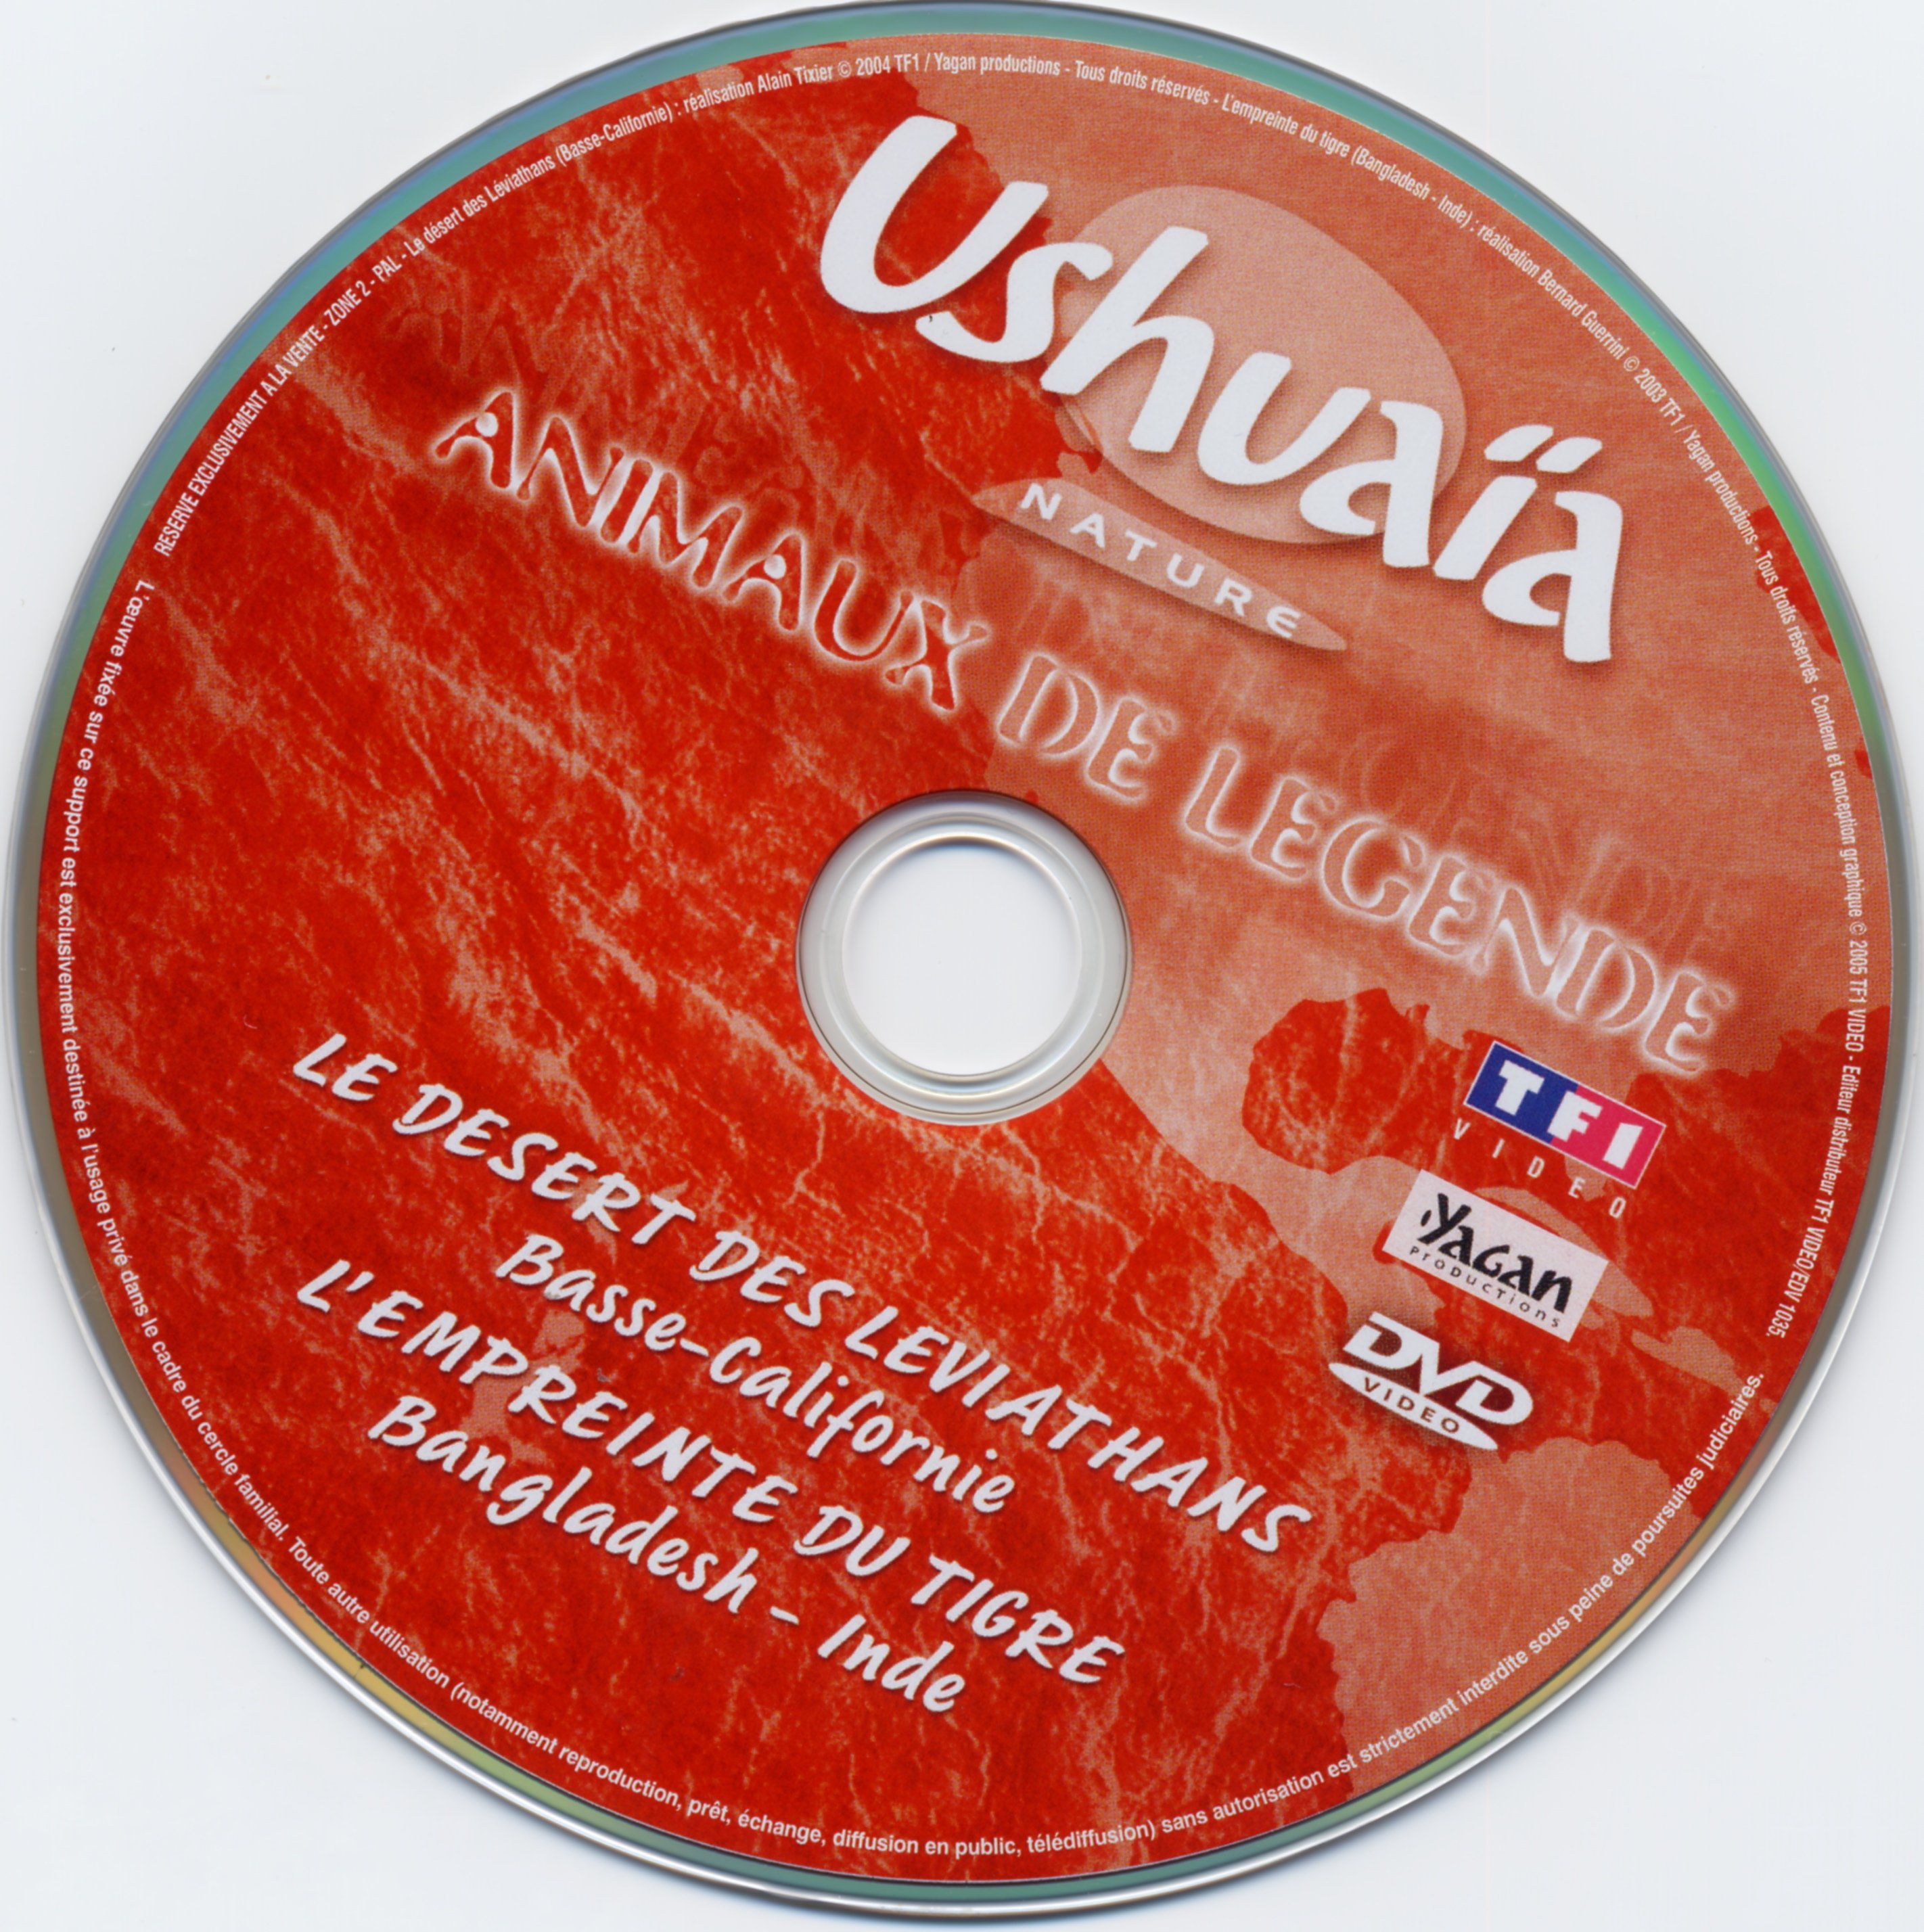 Ushuaia - Animaux de lgende